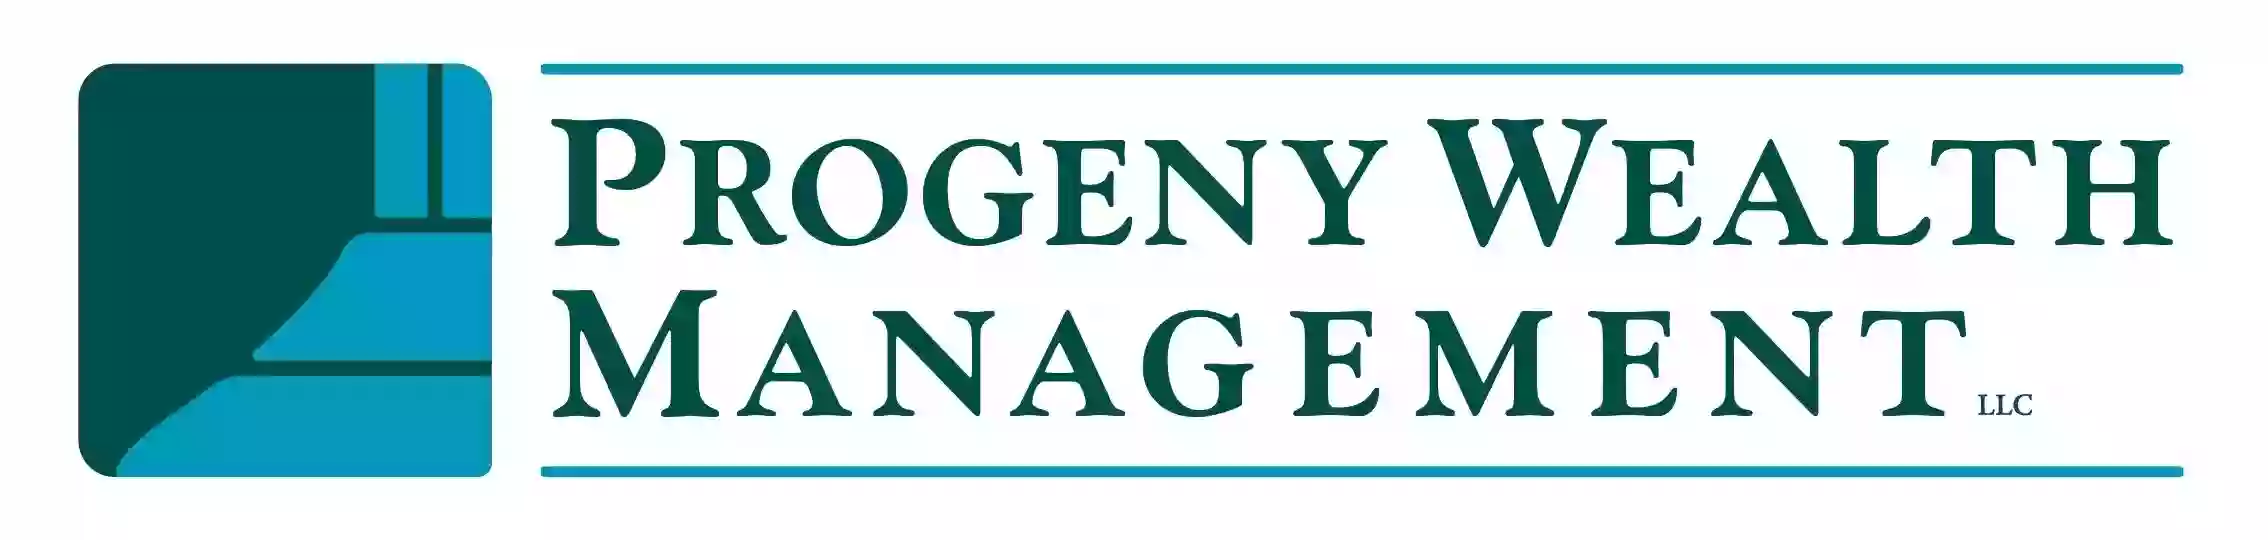 Progeny Wealth Management